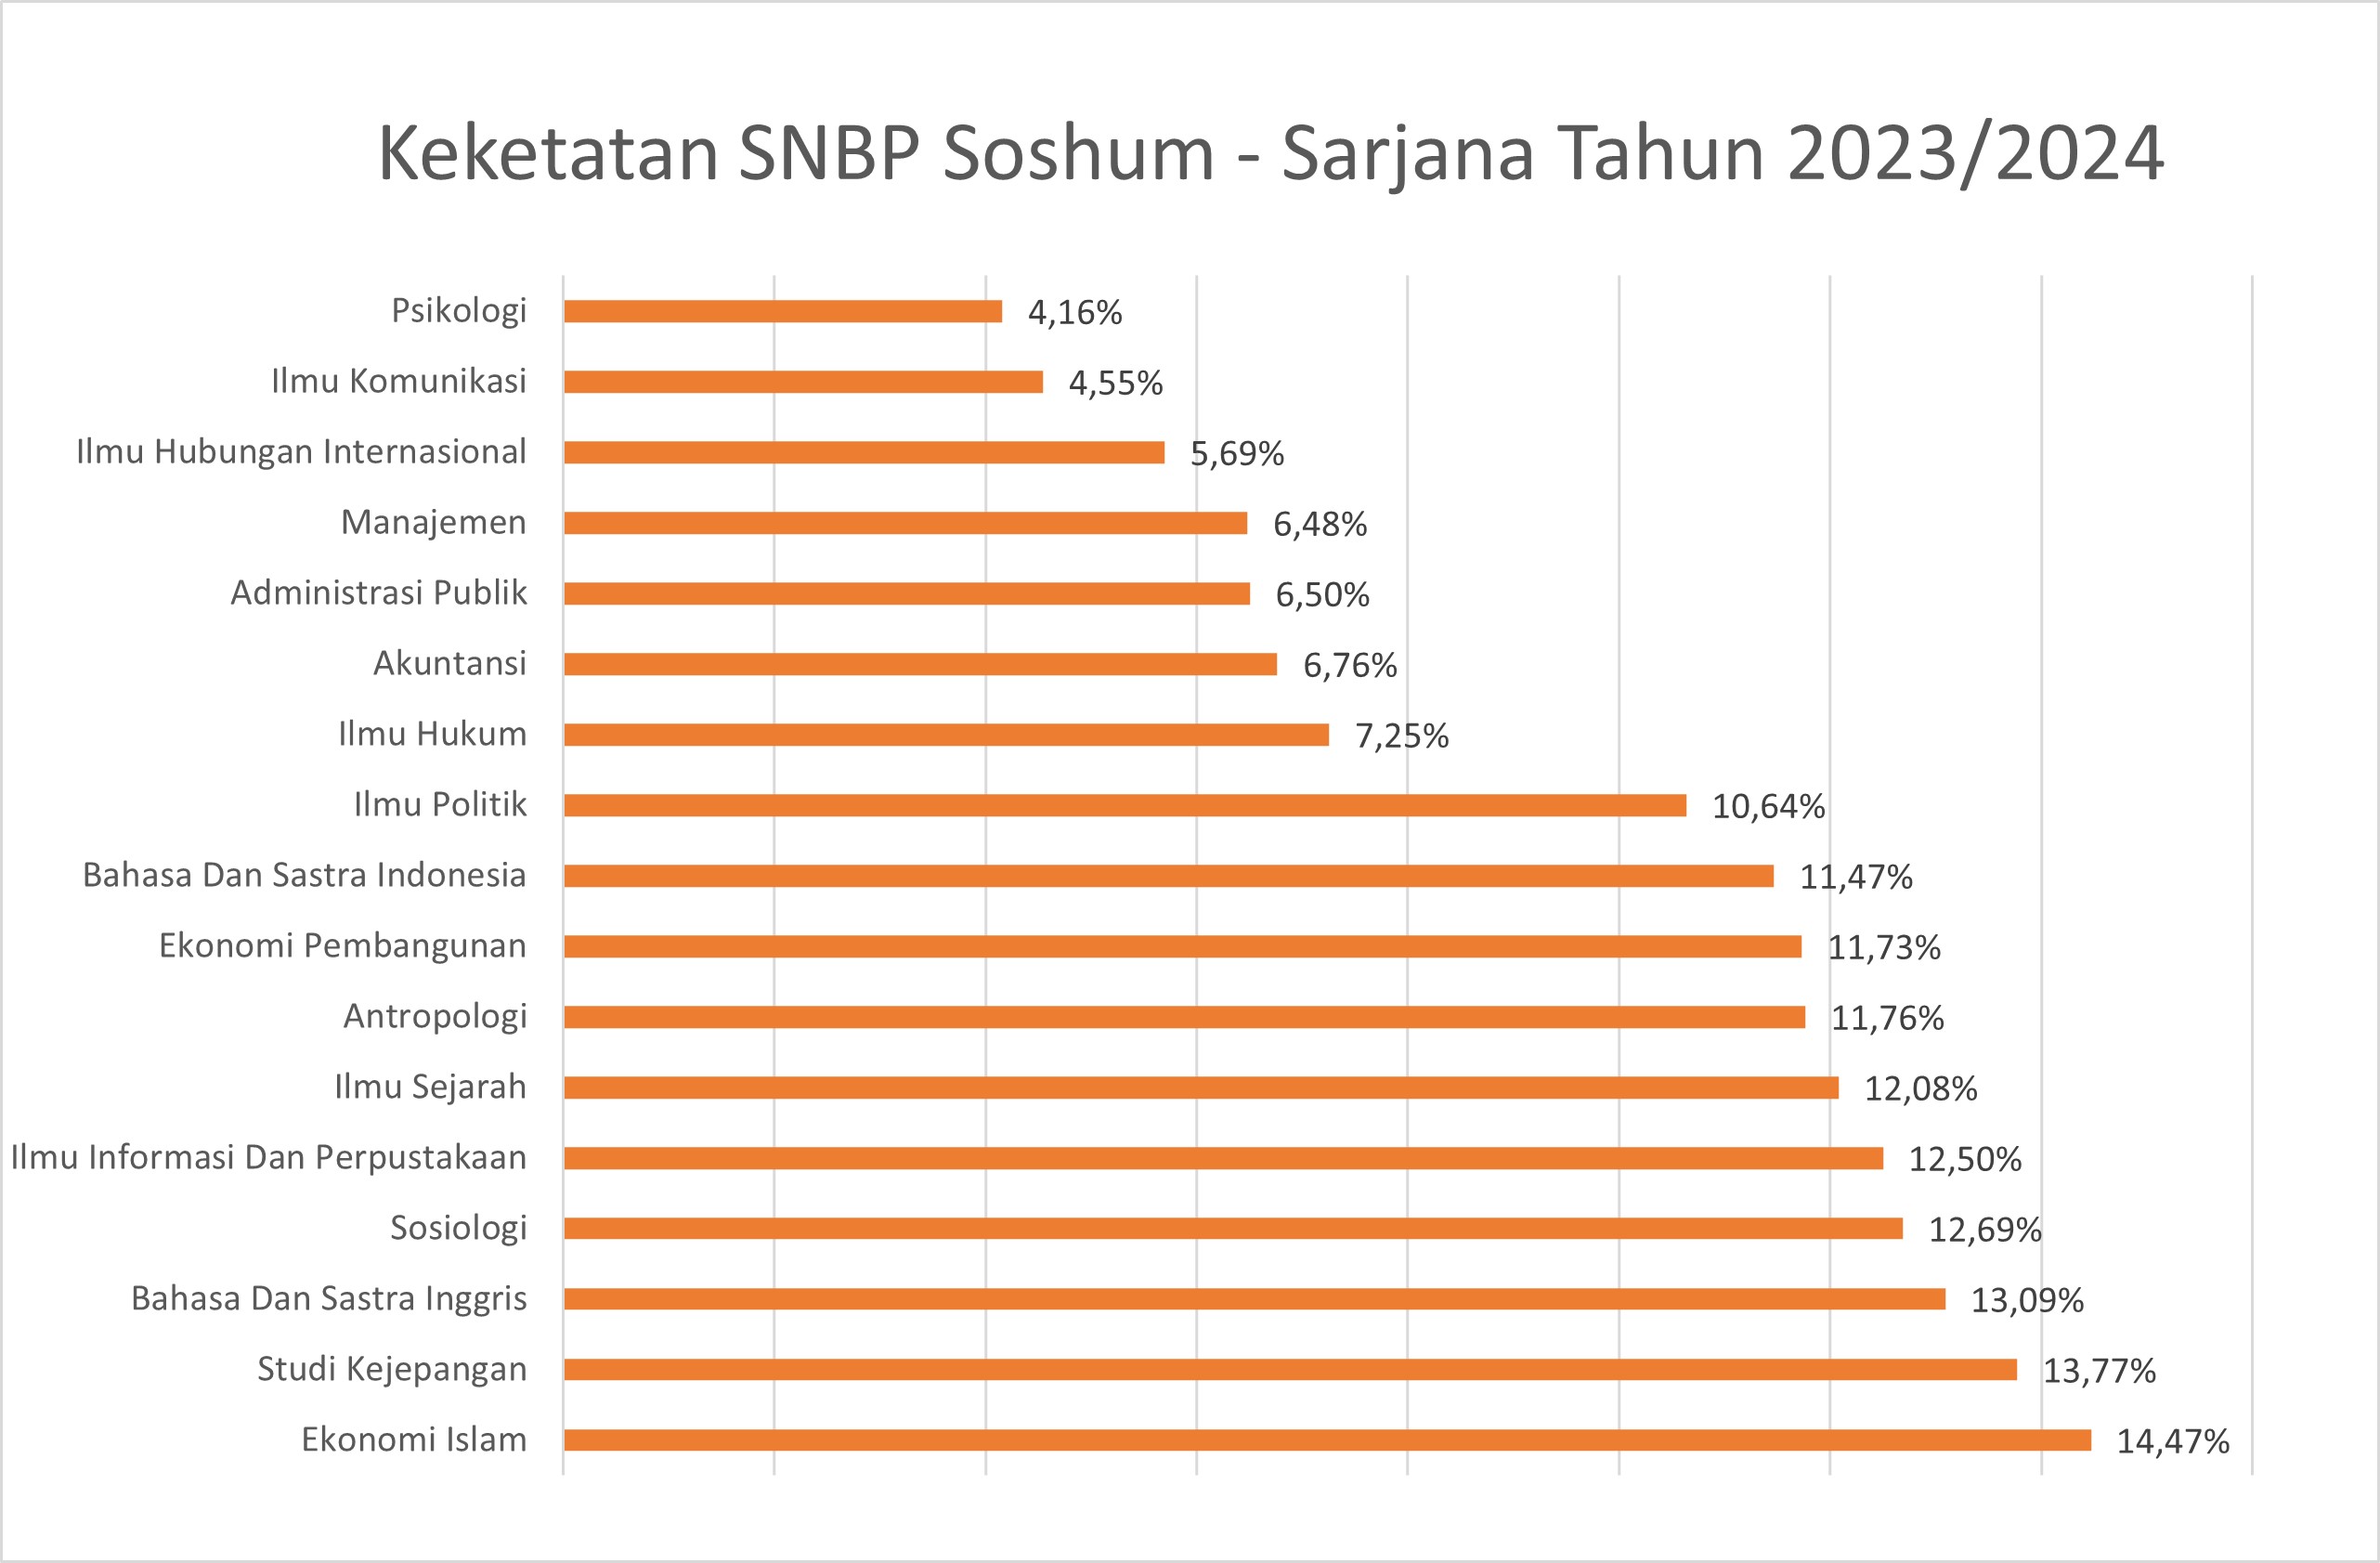 s1-soshum-snbp-2023-rev.jpg